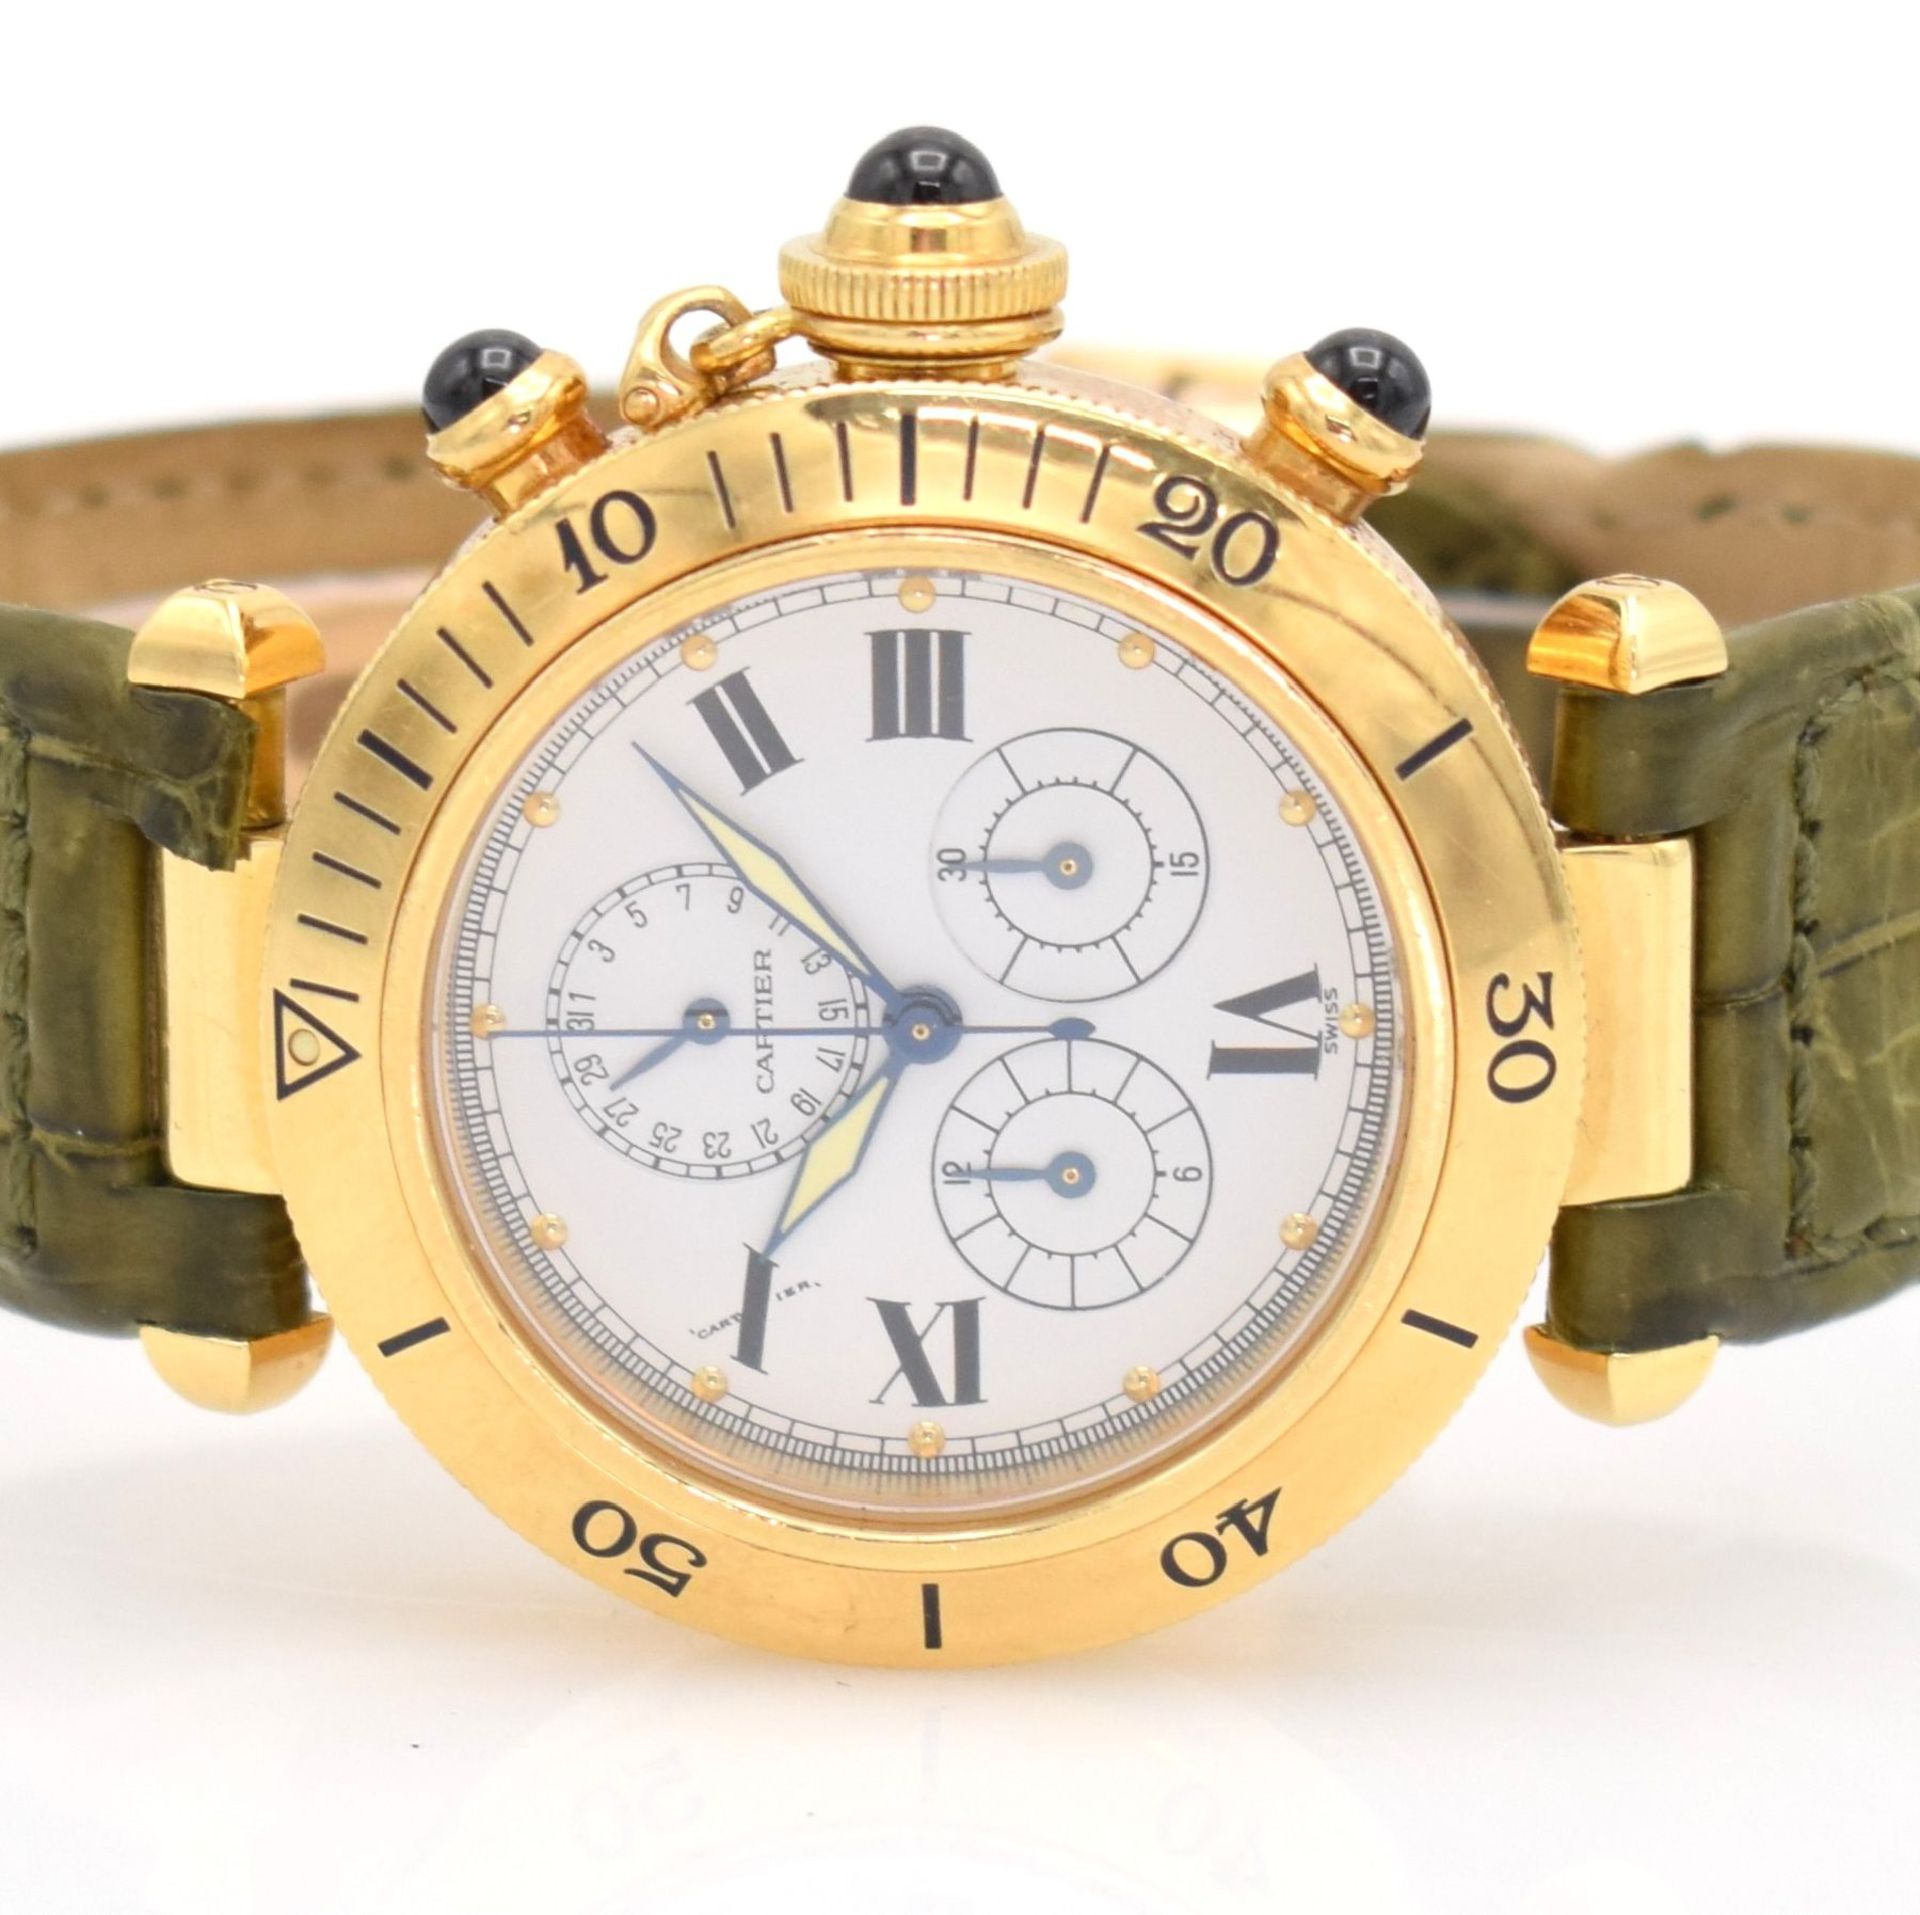 CARTIER Armbandchronograph Serie Pasha in GG 750/000, Schweiz um 2000, Ref. 1353.1, quarz, - Bild 2 aus 9